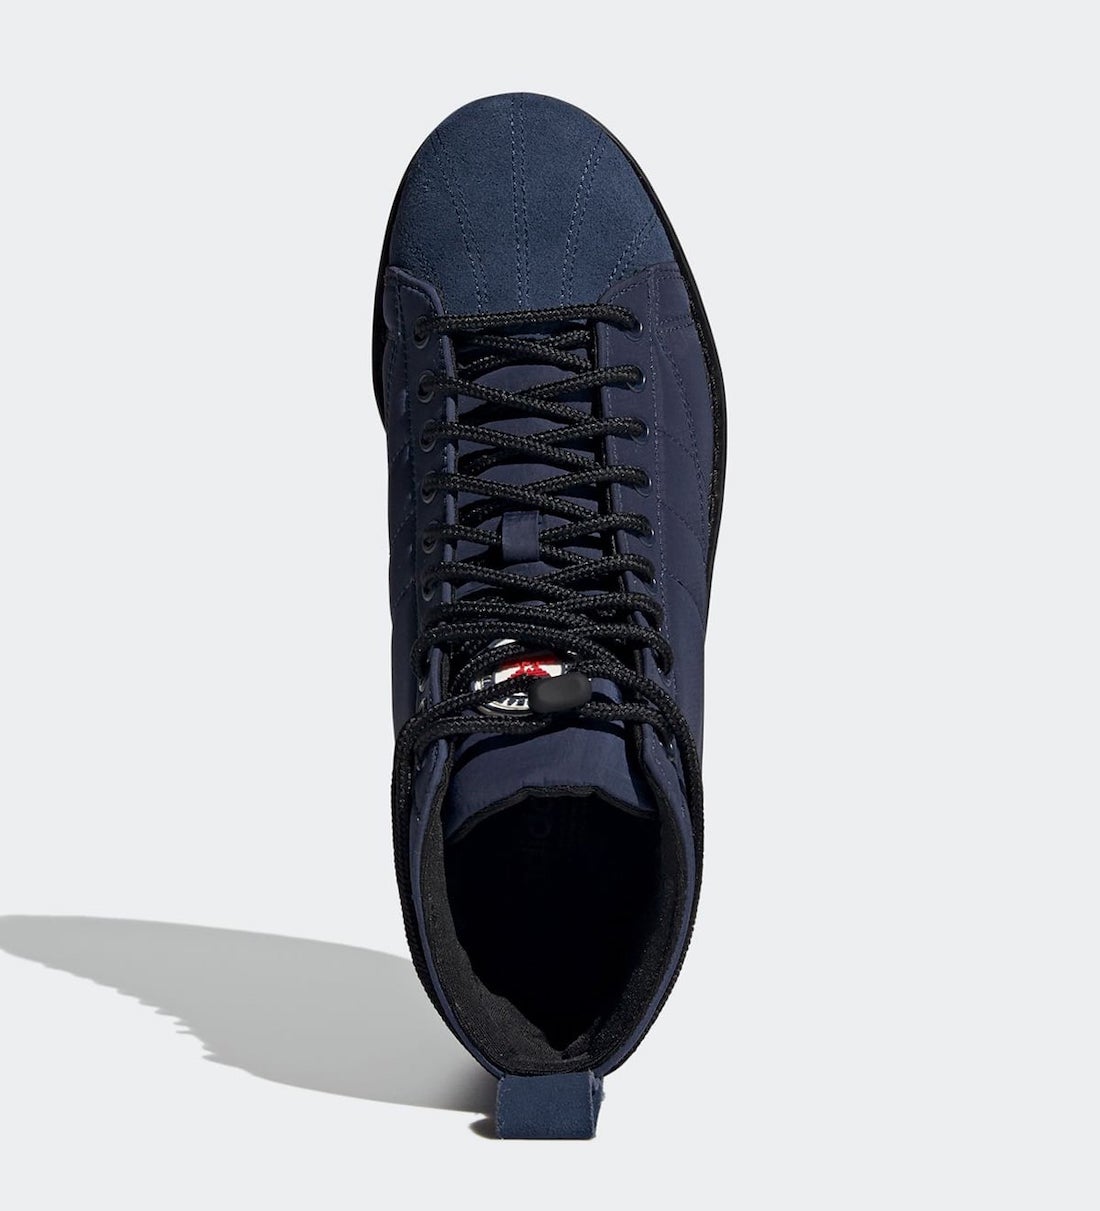 adidas Superstar Boots Navy H05133 Release Date Info